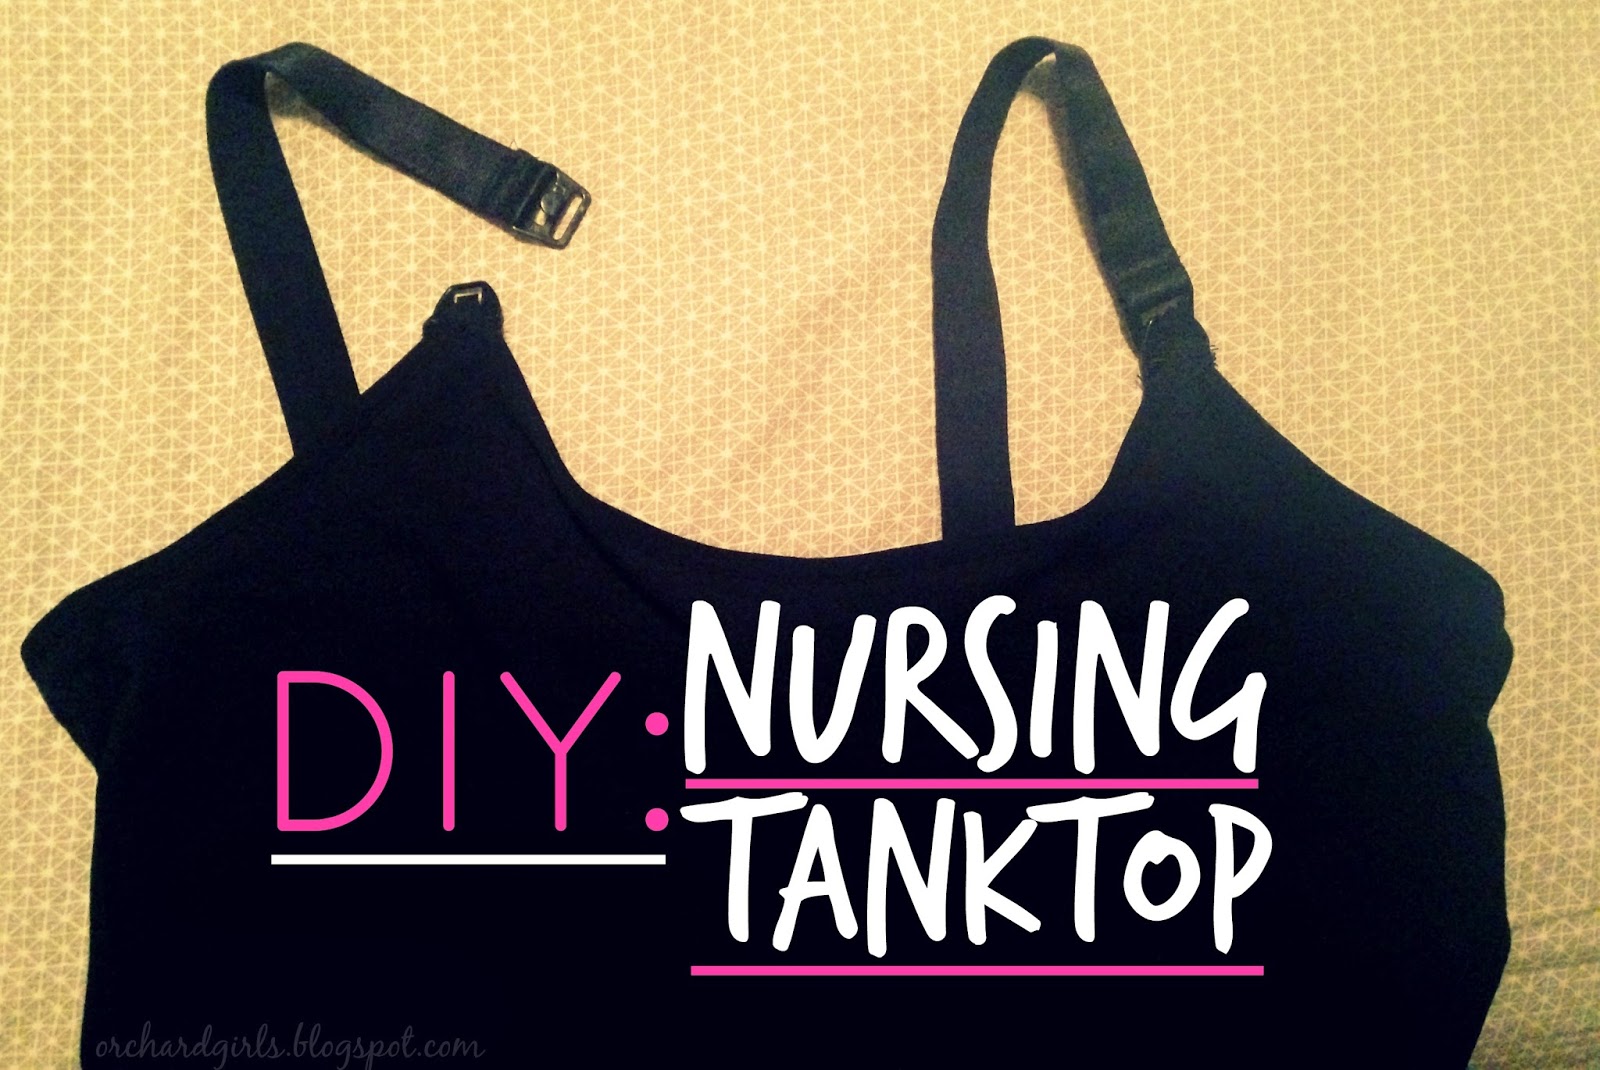 DIY - Nursing Tank Top for under $10.00